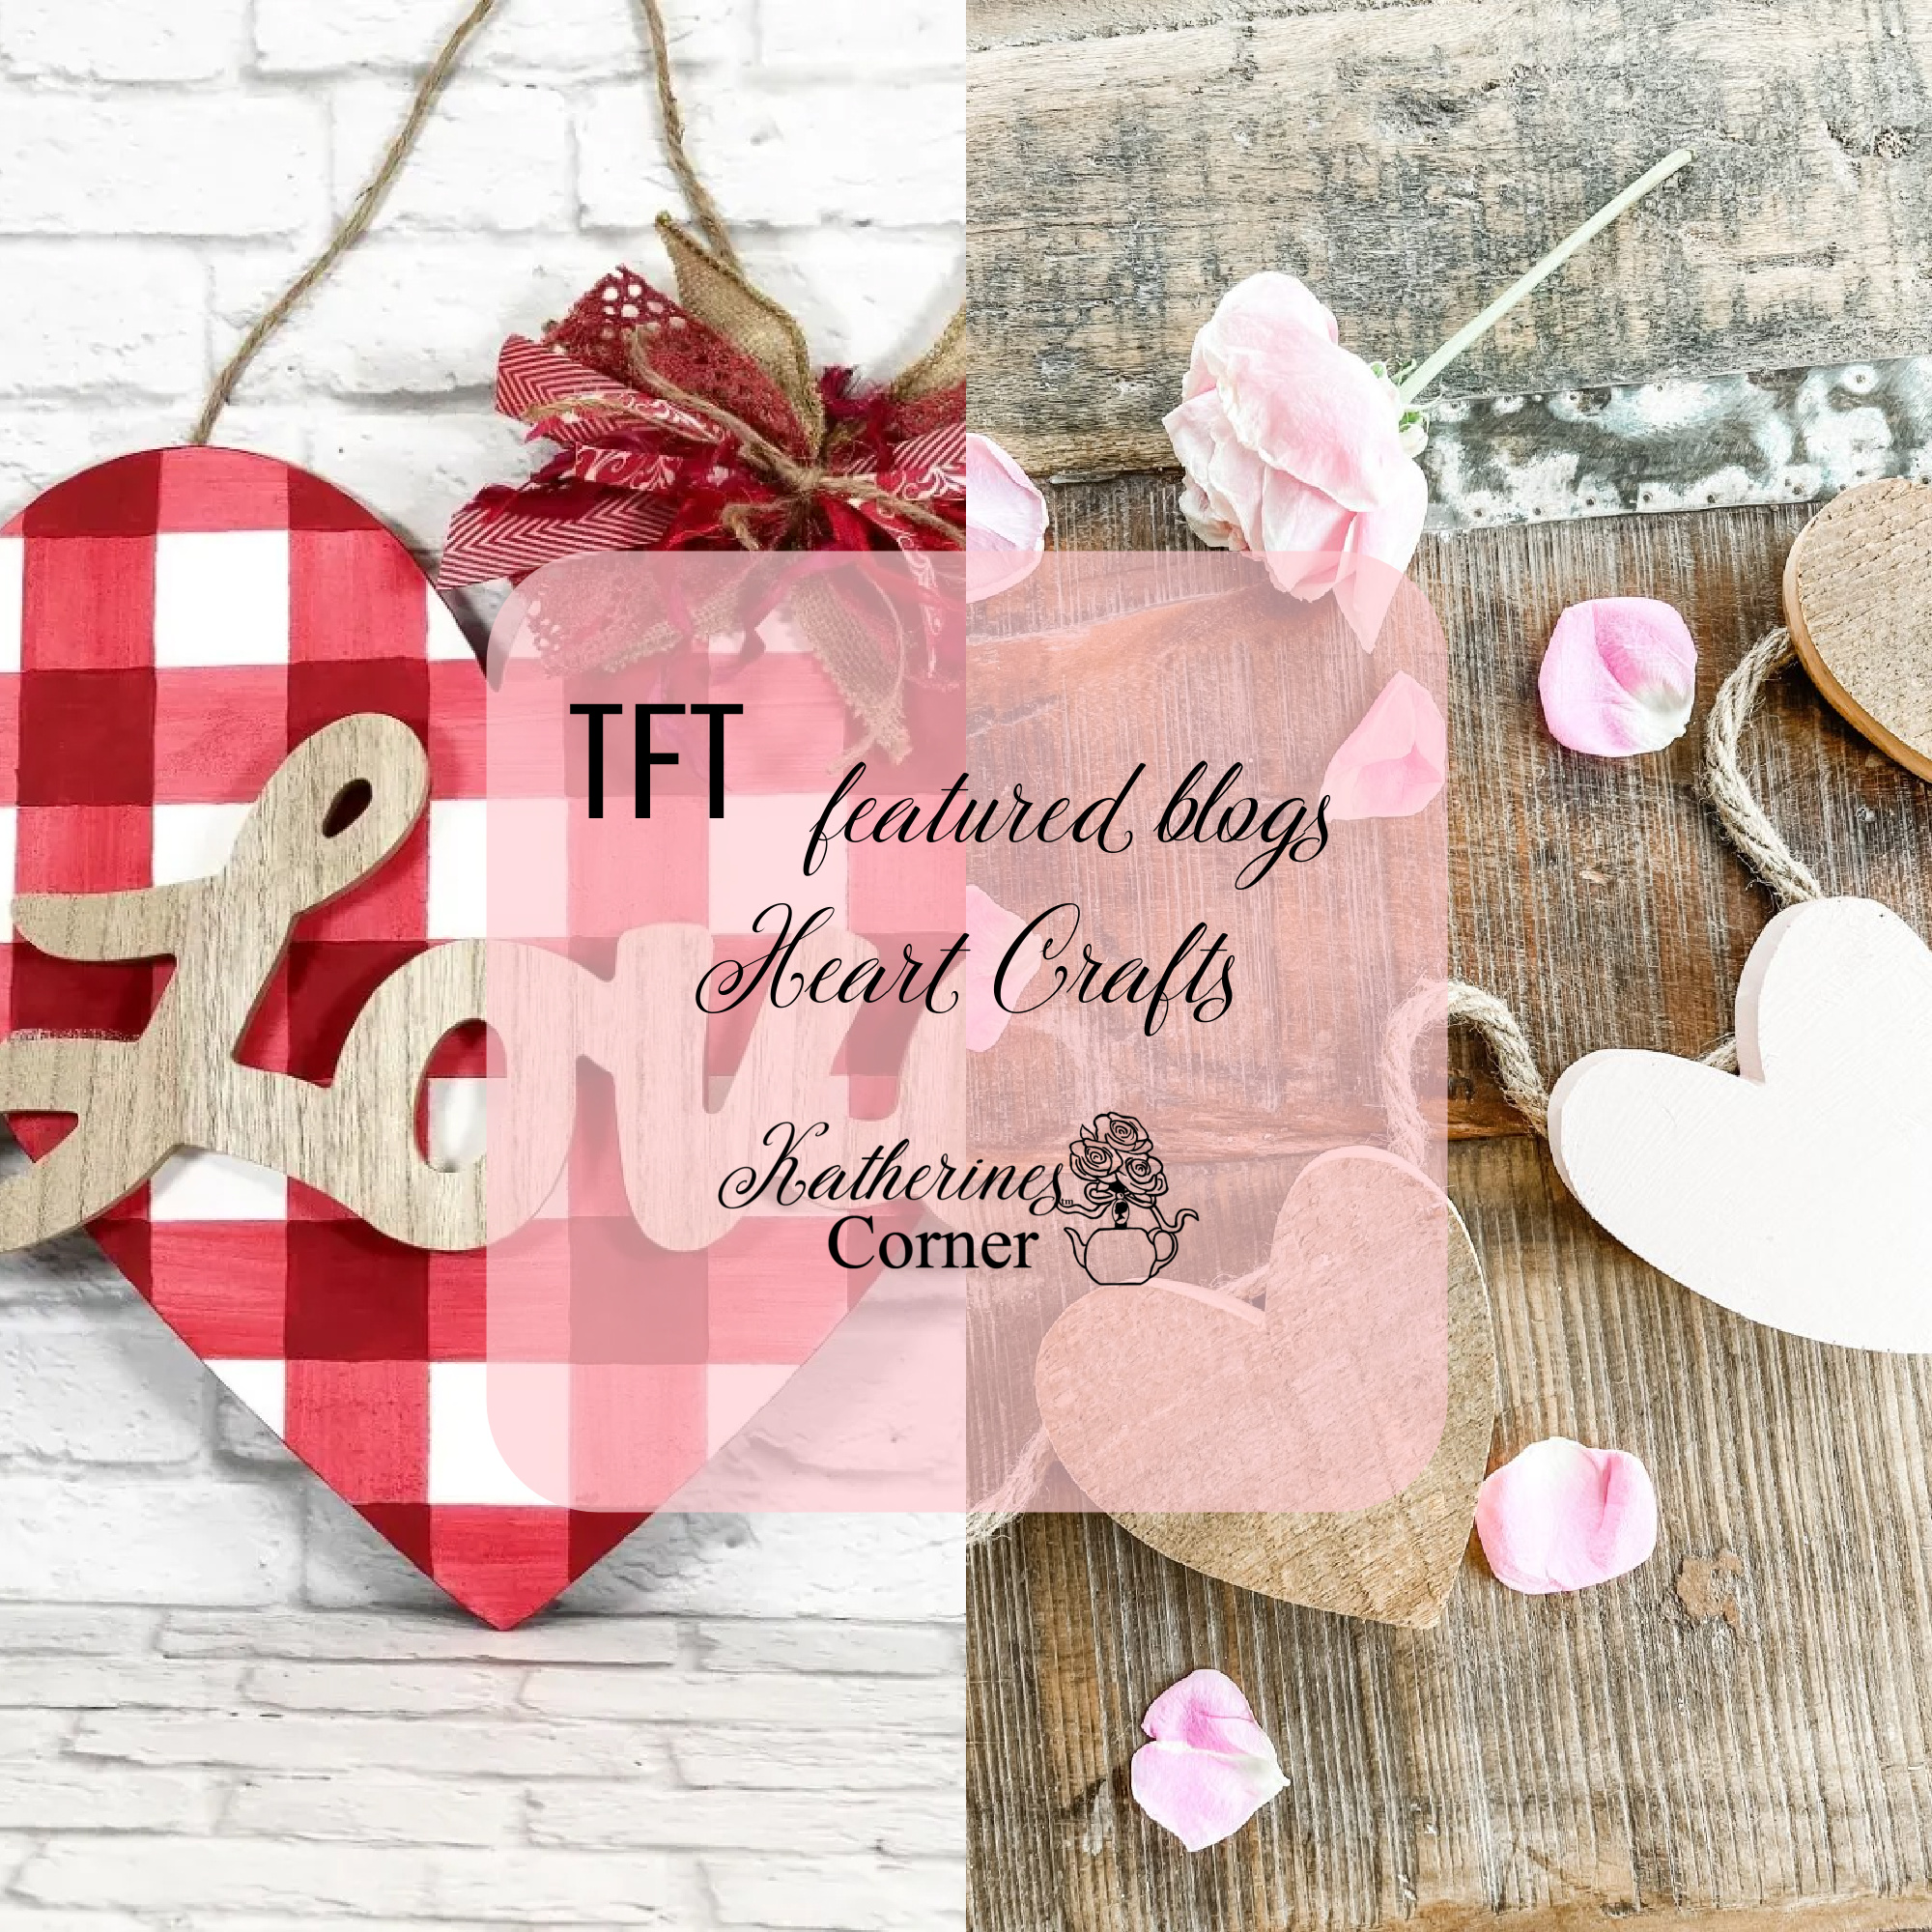 Heart Crafts and TFT Blog Hop